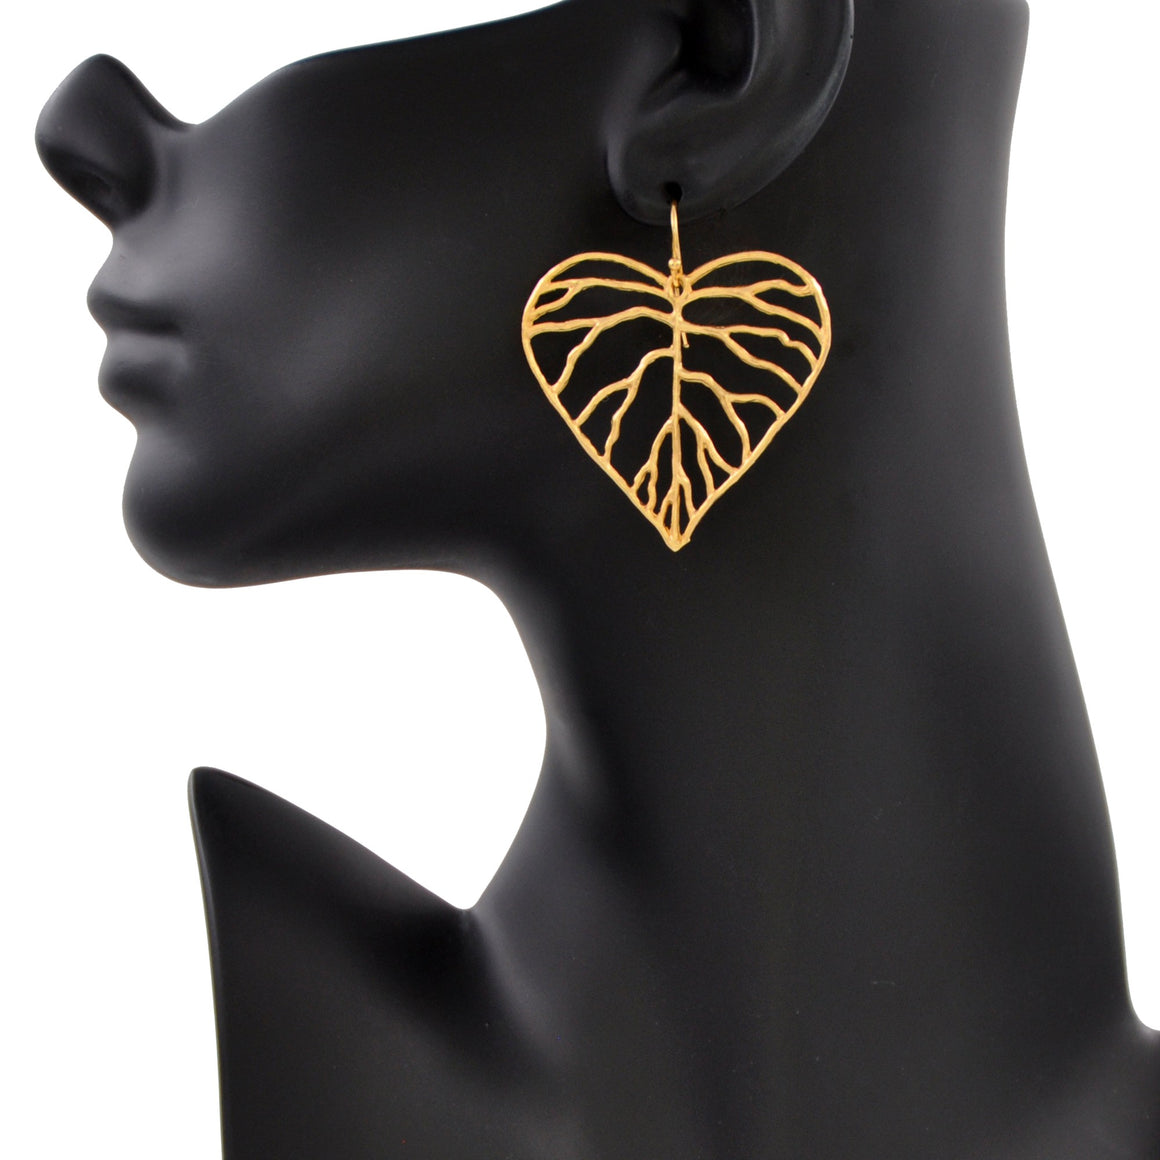 Heart Leaf Earrings (Large) - 24K Gold Plated